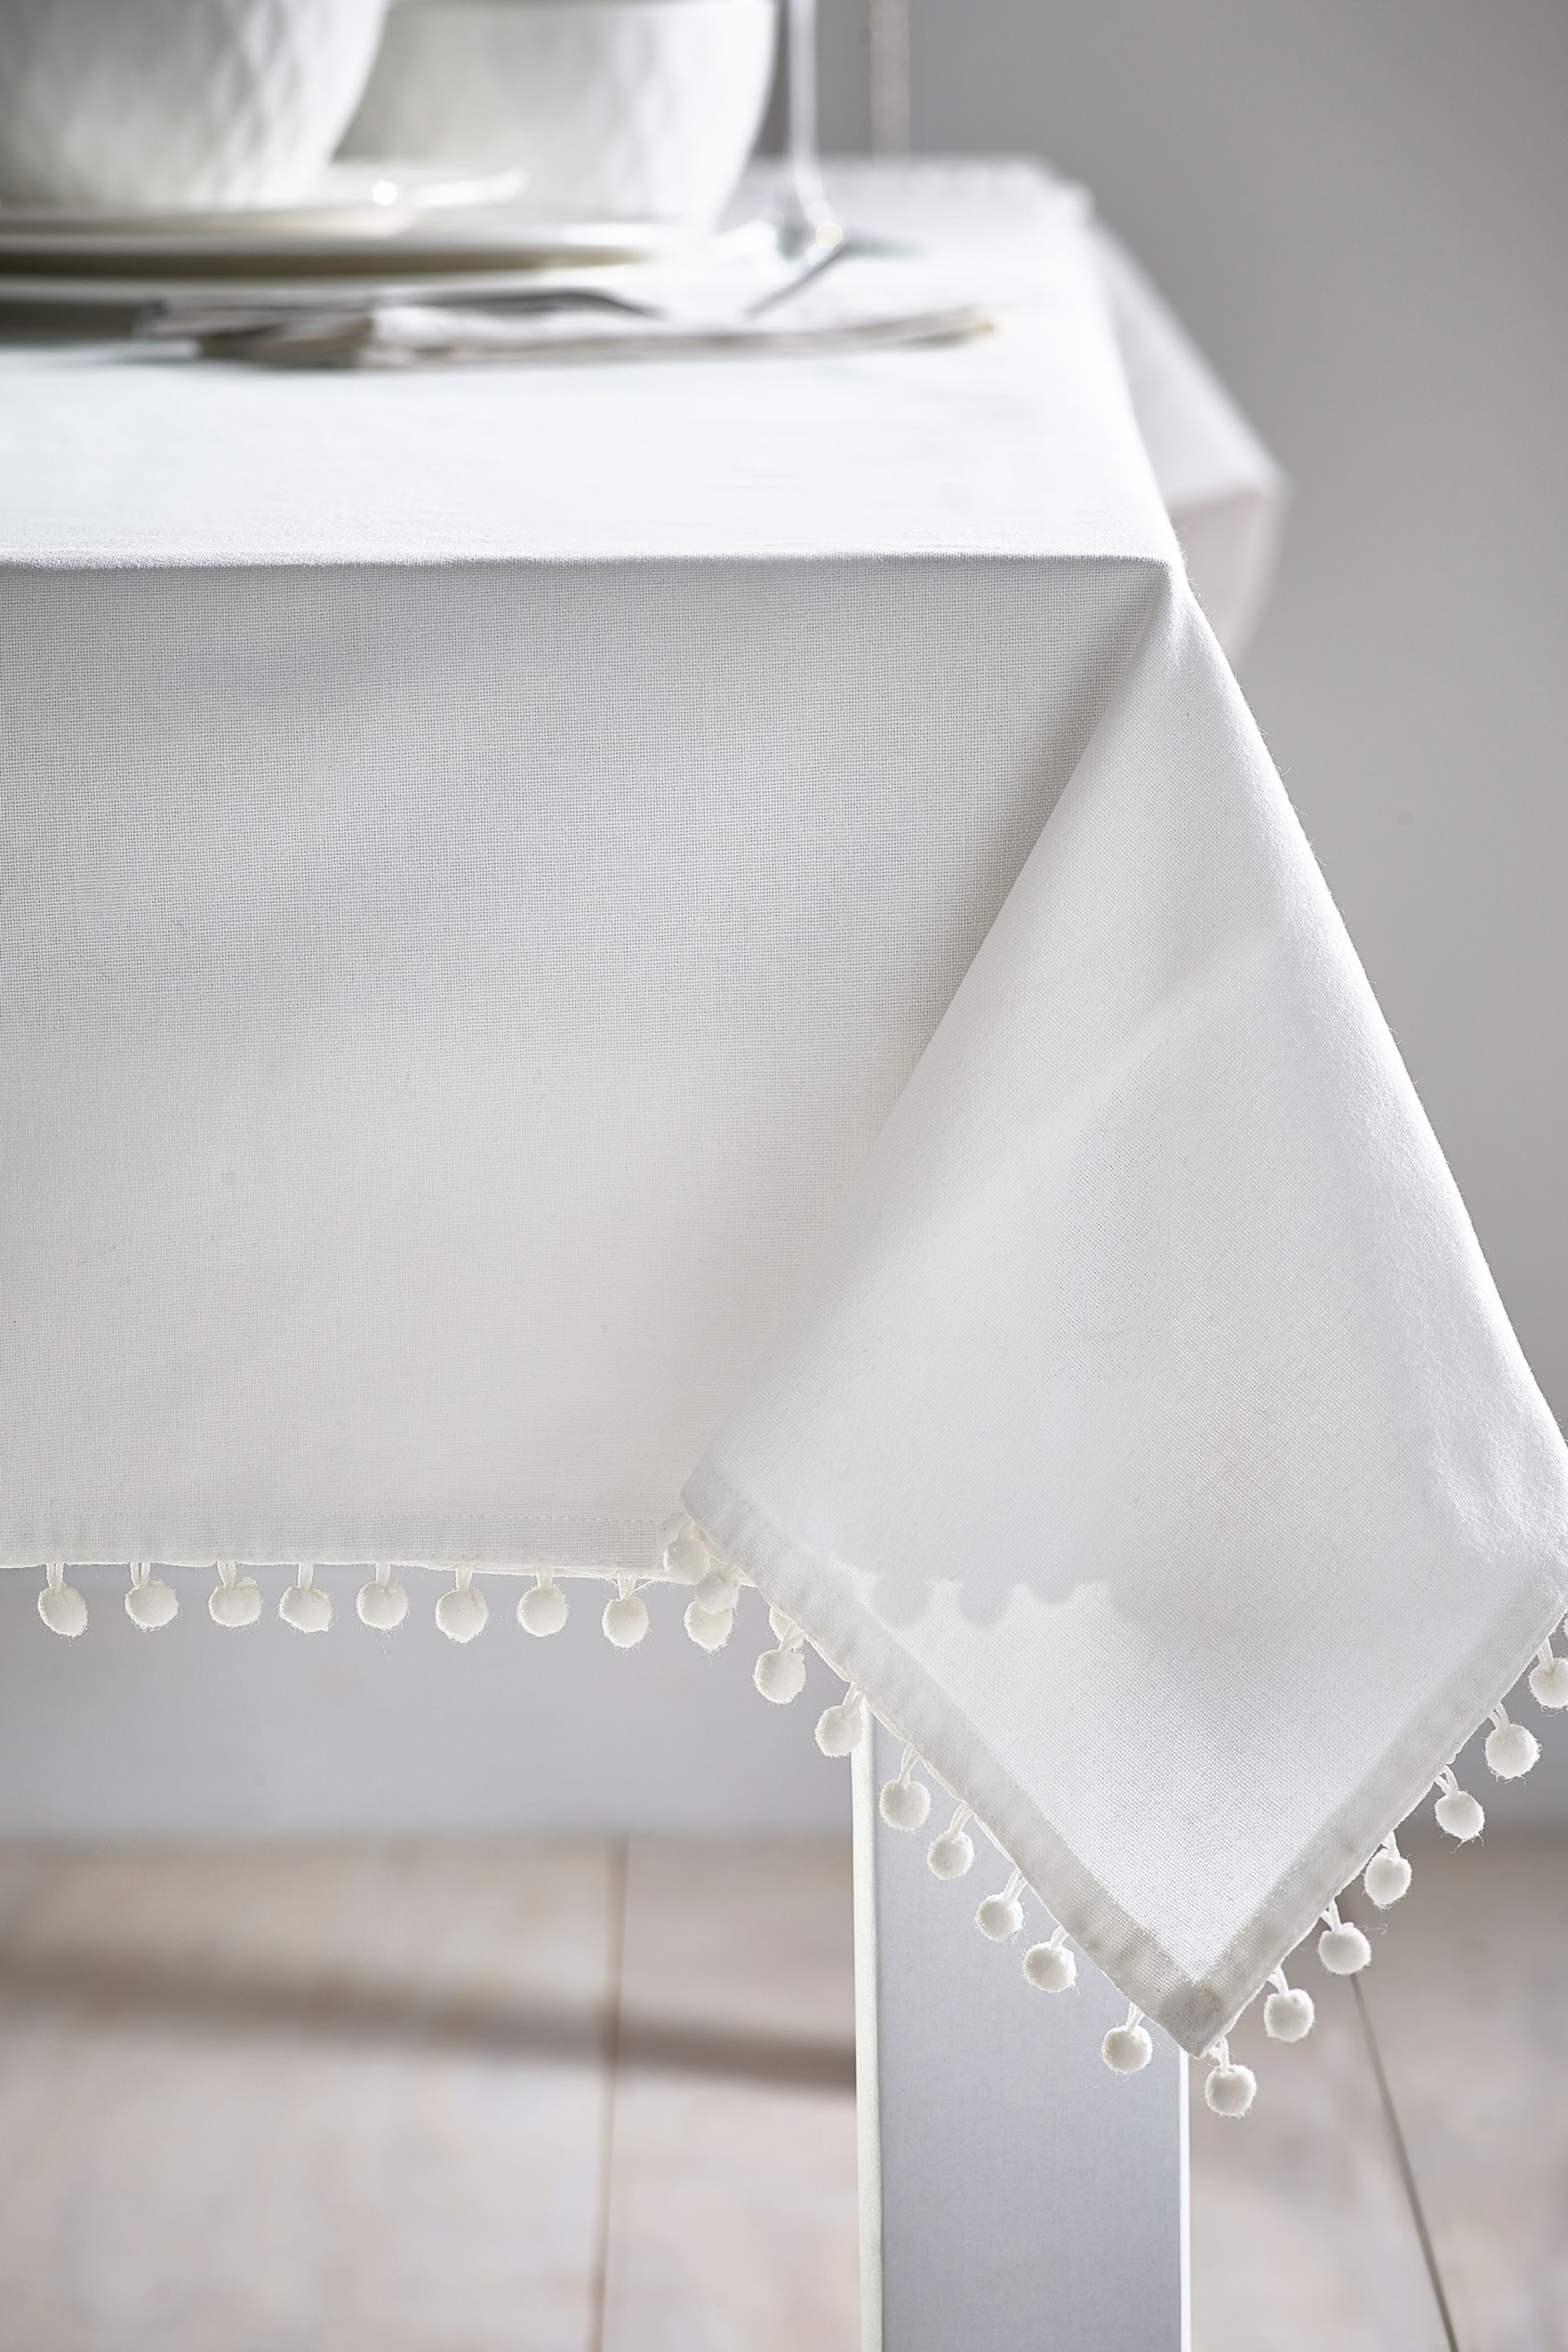 White Pom Pom Tablecloth and Napkins Table Cloth - Image 2 of 2